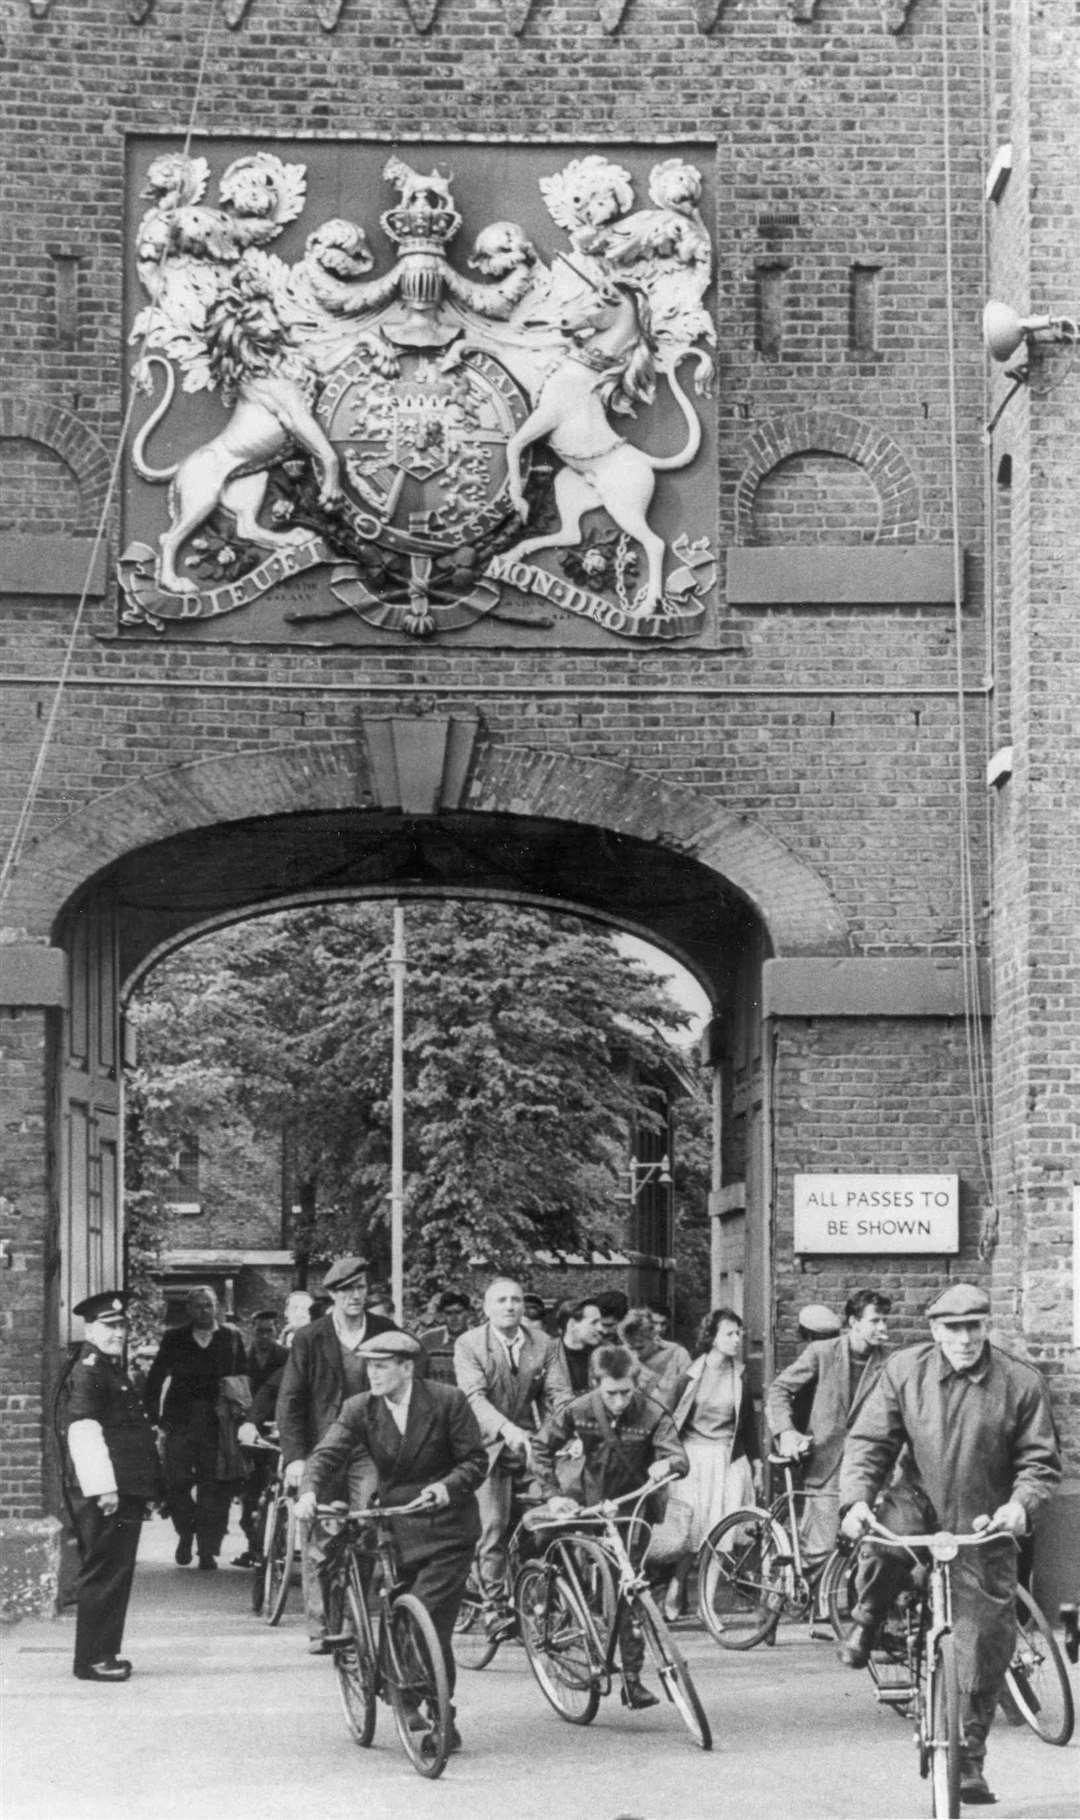 Dockyard workers leaving the premises in 1960